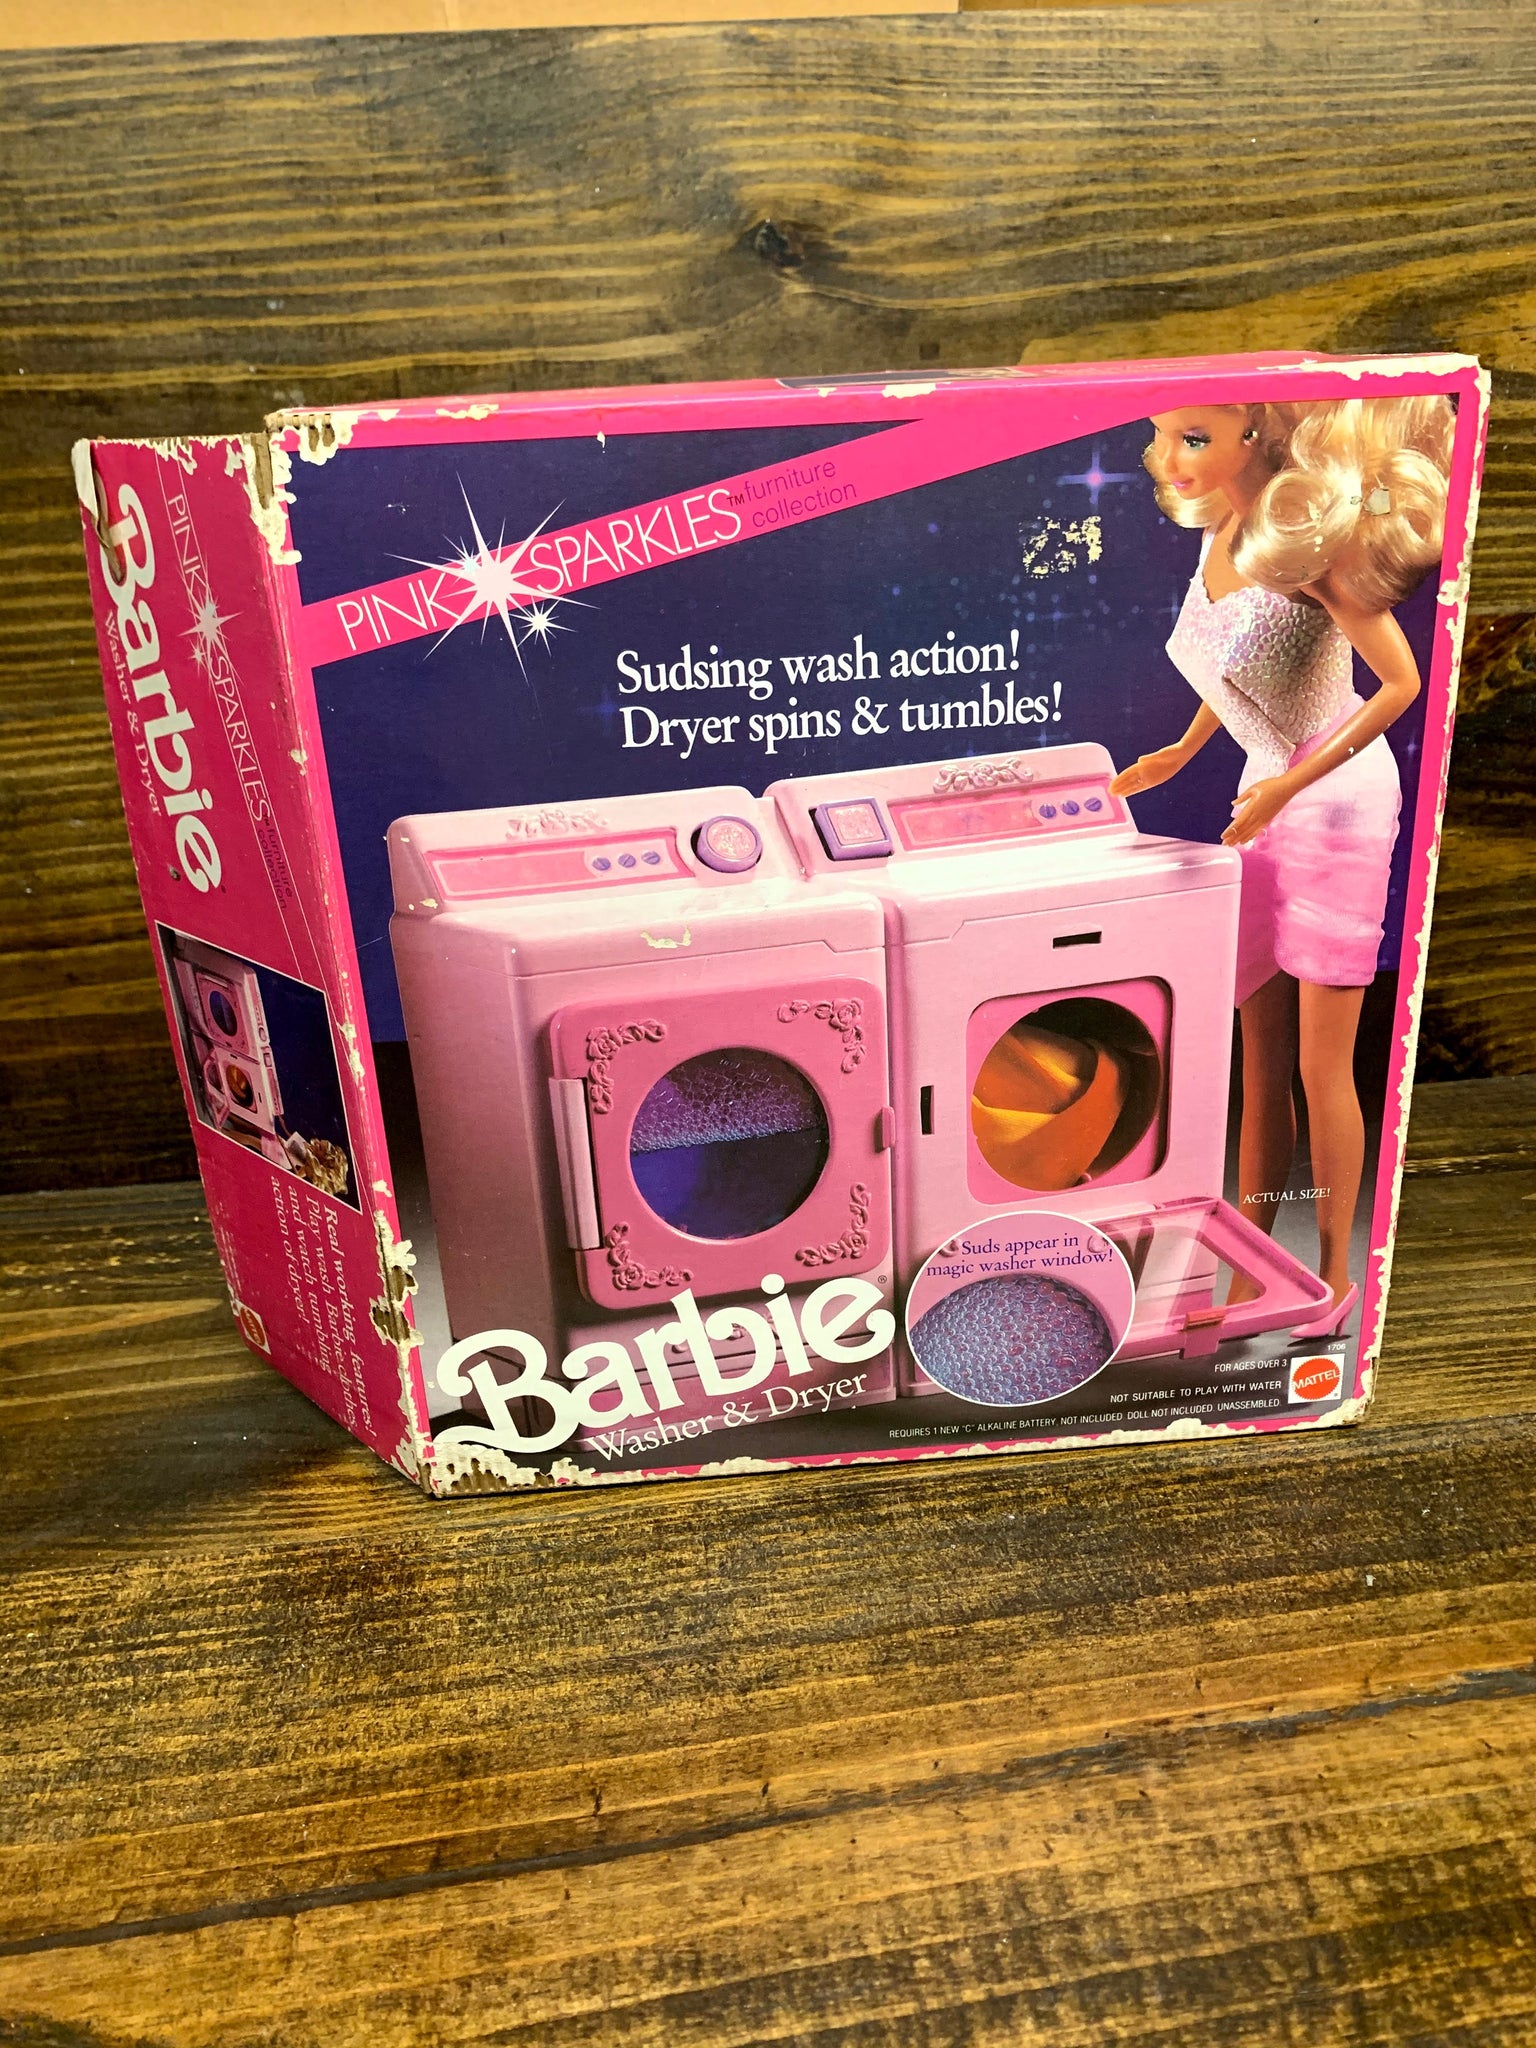 Barbie Washer & Dryer Pink Sparkles Furniture Collection 1990